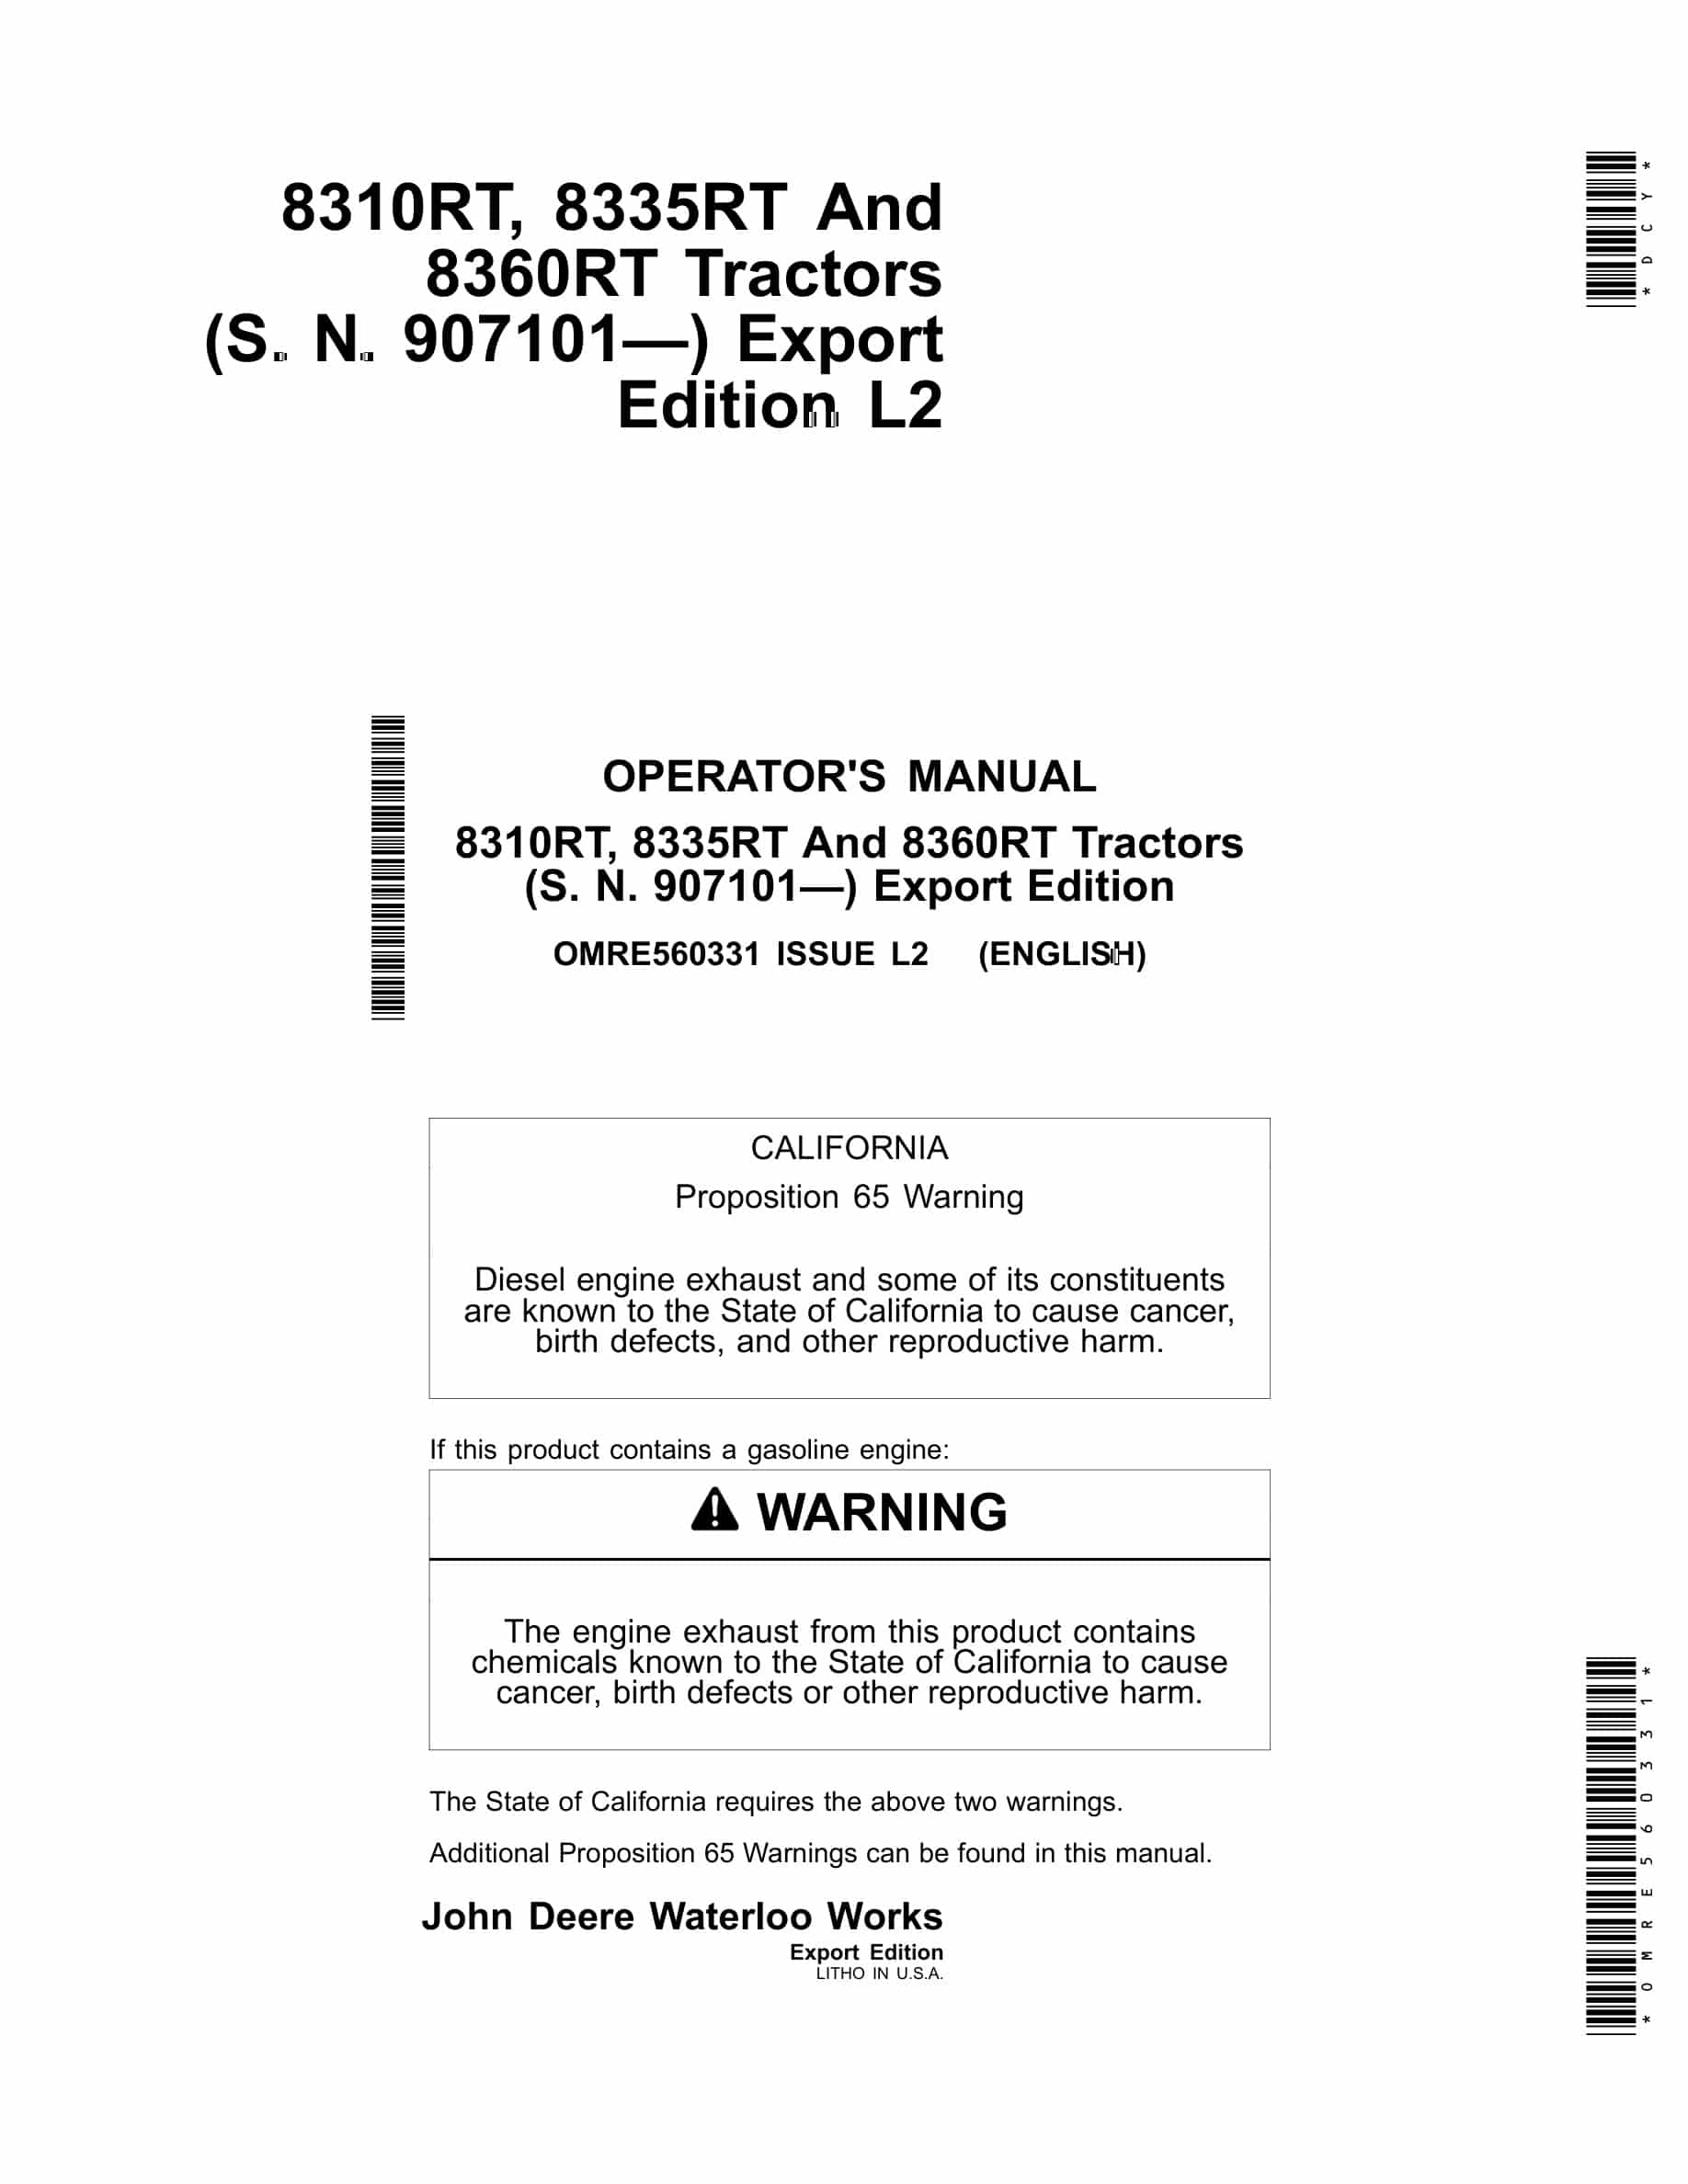 John Deere 8310rt, 8335rt And 8360rt Tractors Operator Manuals OMRE560331-1